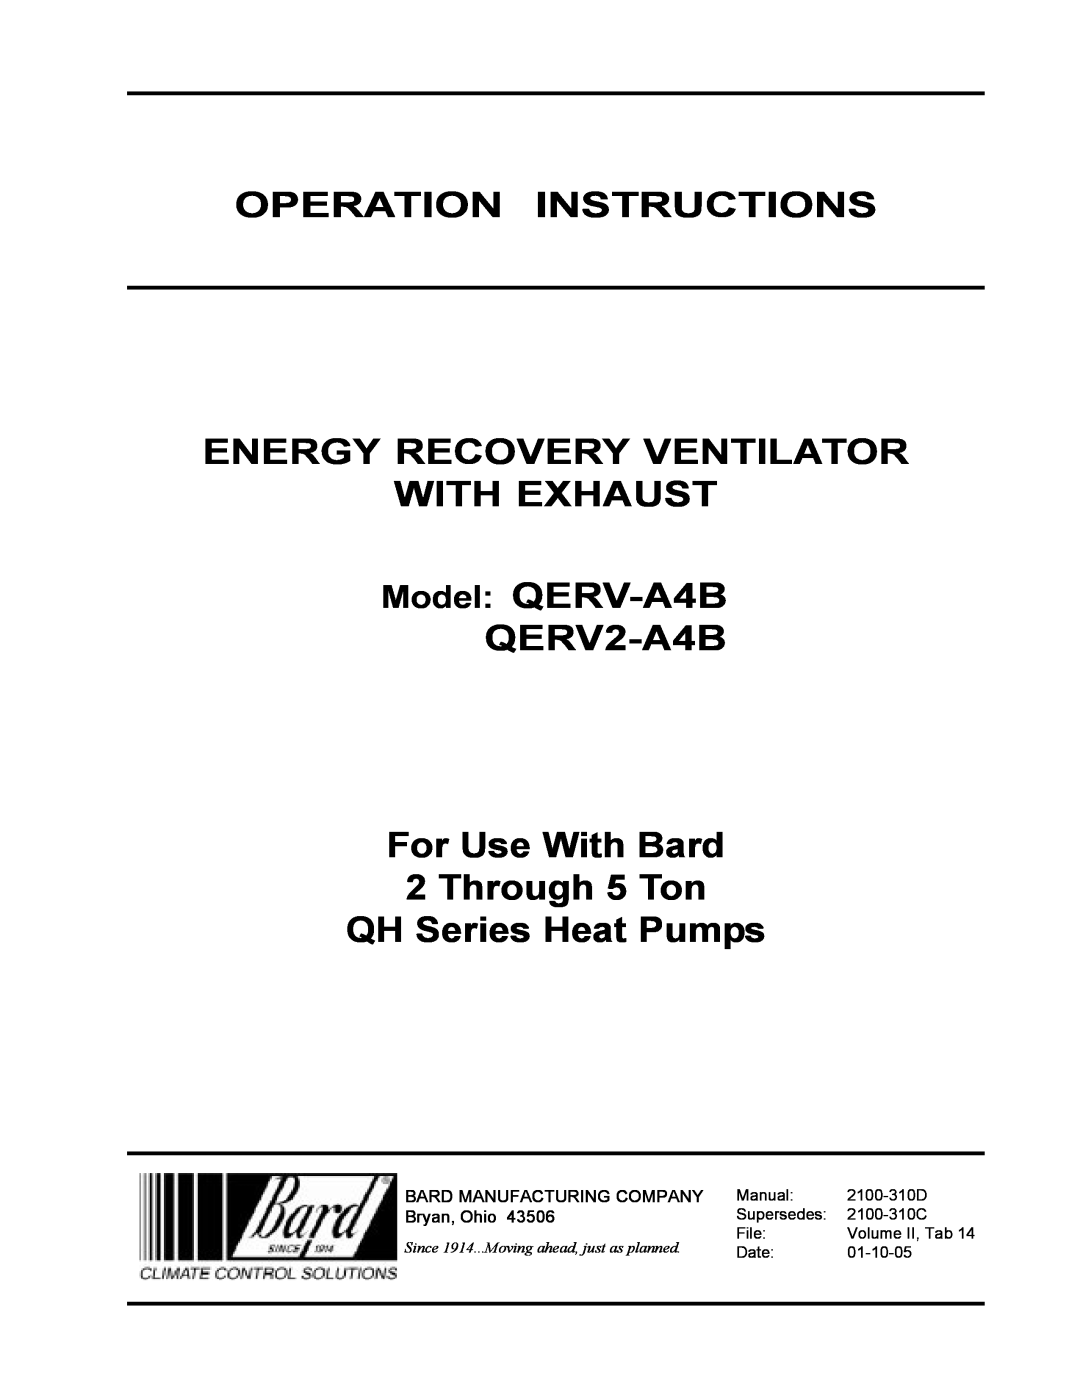 Bard QERV2-A4B manual Bard Manufacturing Company, Bryan, Ohio, Operation Instructions, Through 5 Ton QH Series Heat Pumps 